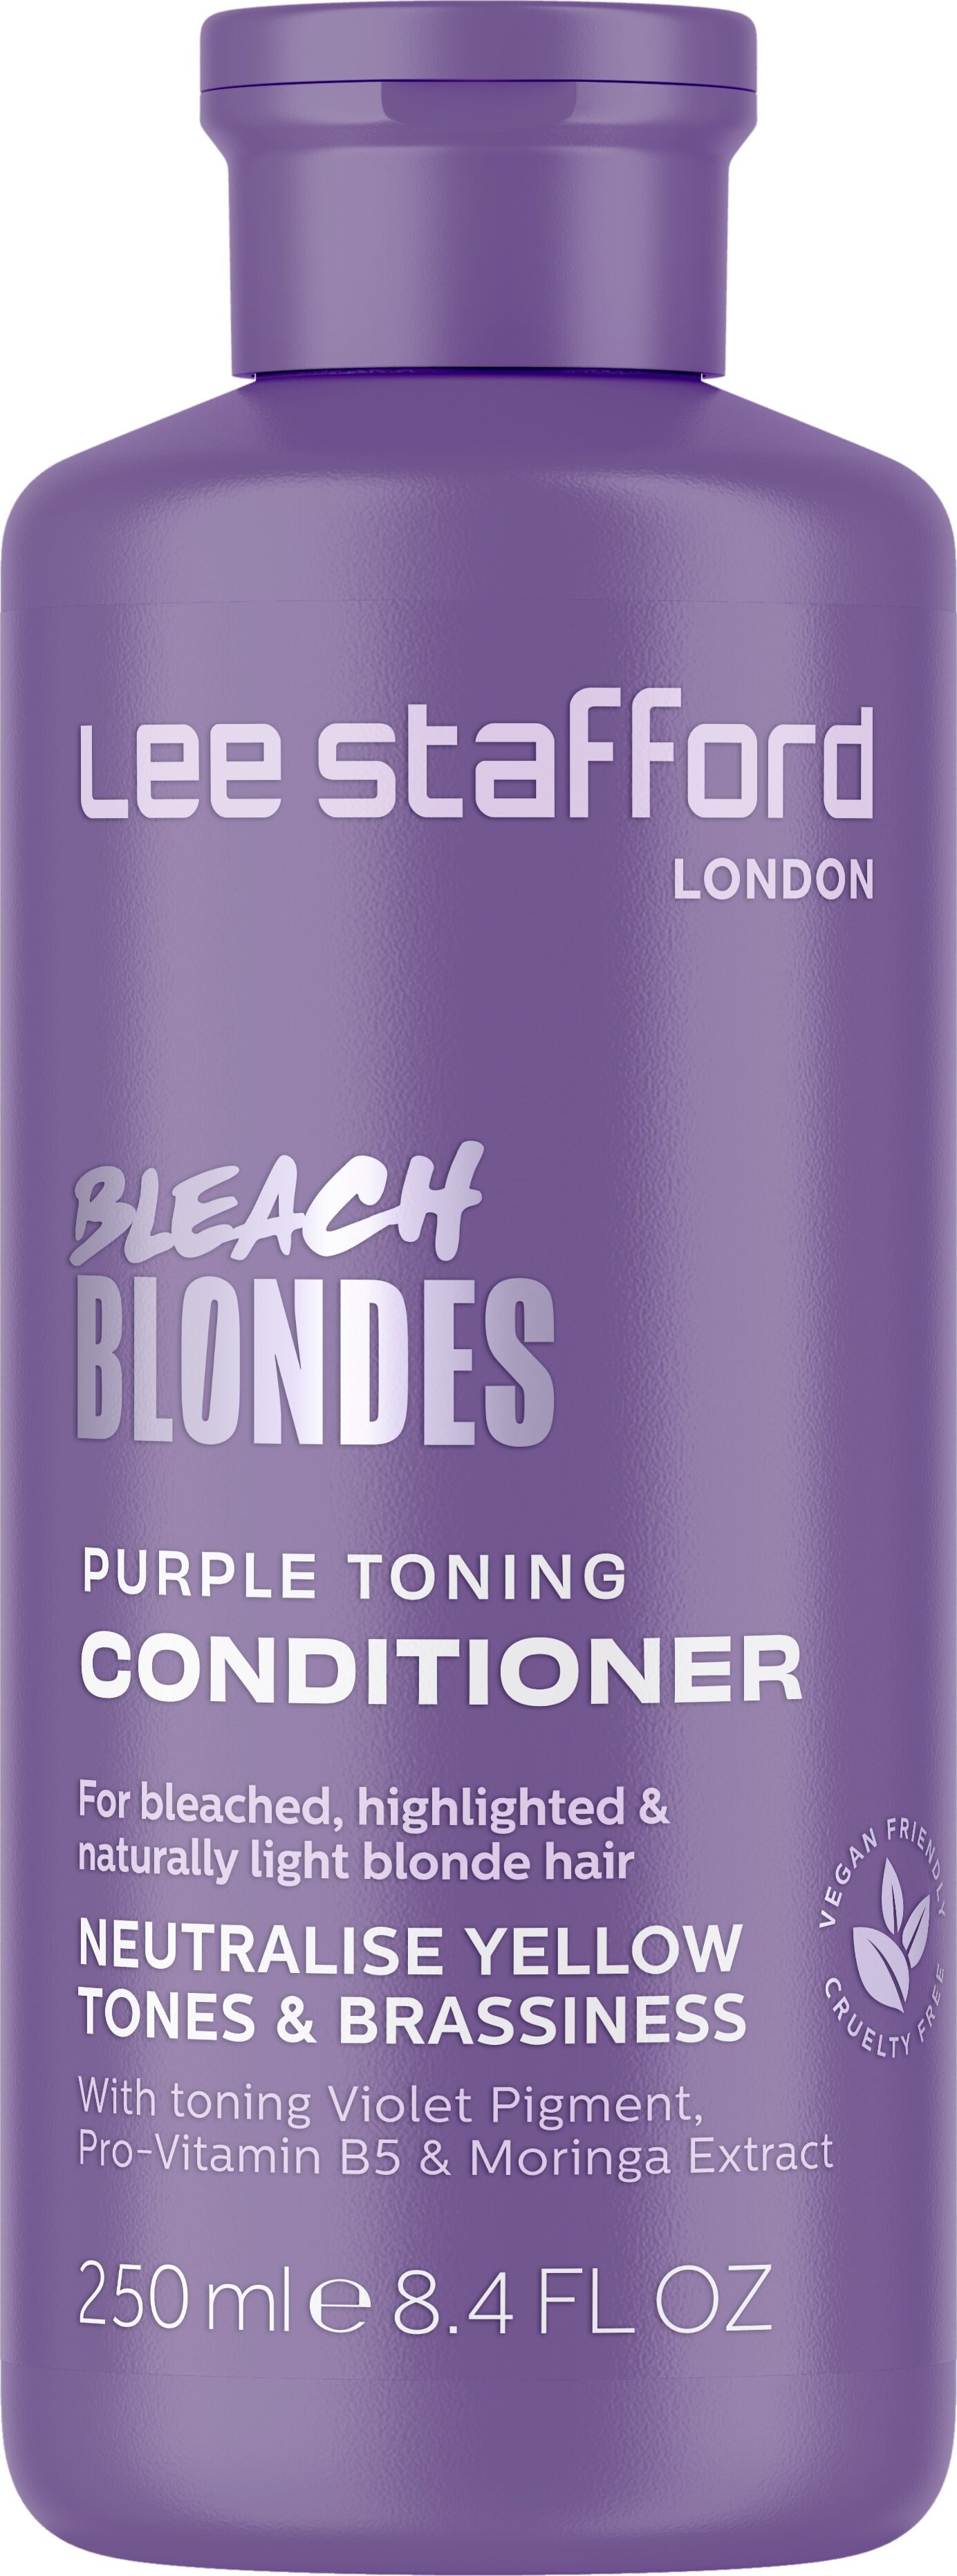 Se Lee Stafford - Bleach Blondes Purple Toning Conditioner - 250 Ml hos Gucca.dk